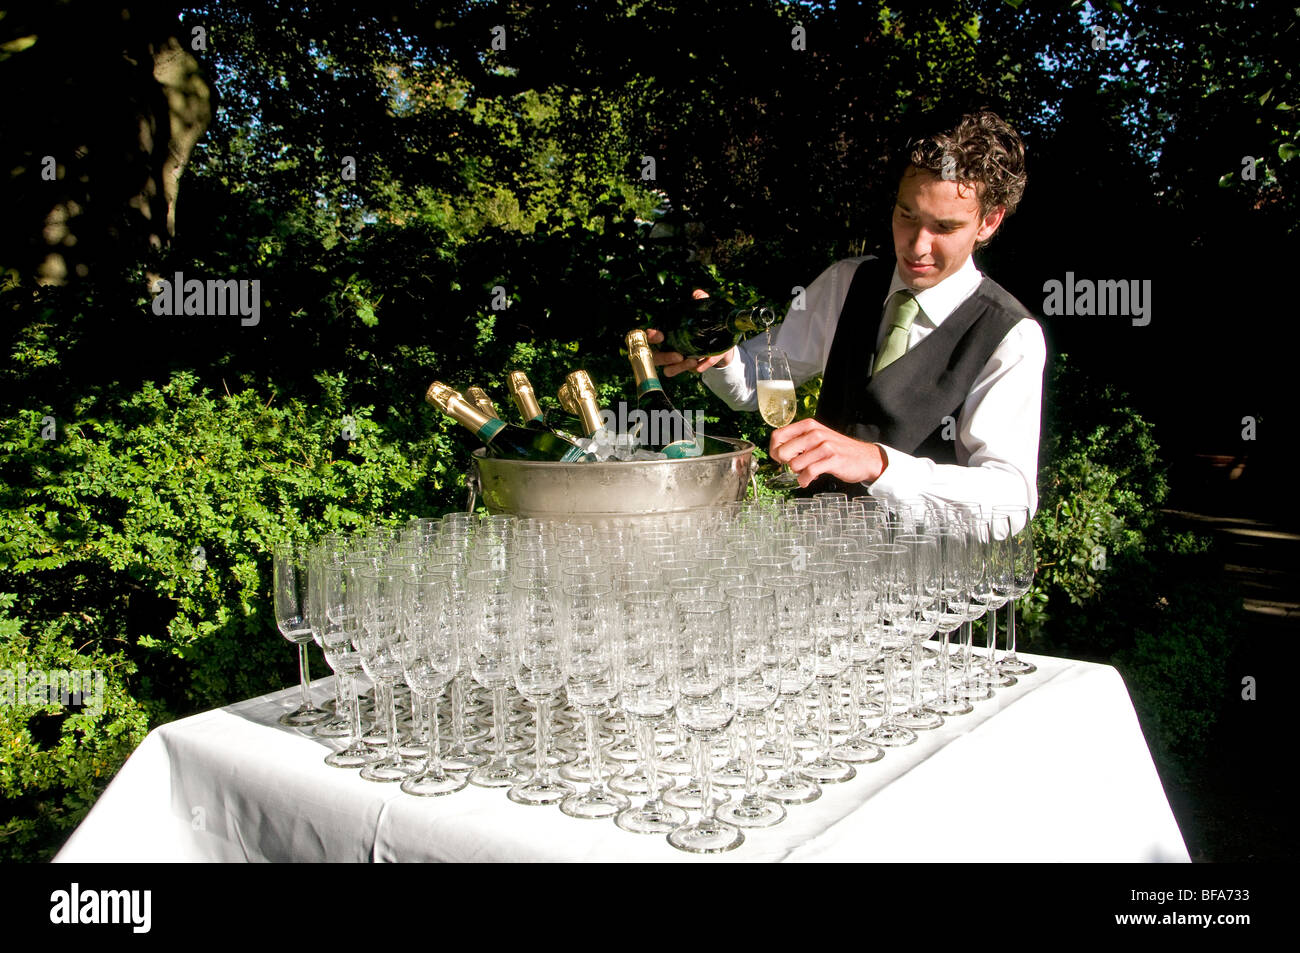 Glasses champagne party wedding waiter garden glas Stock Photo